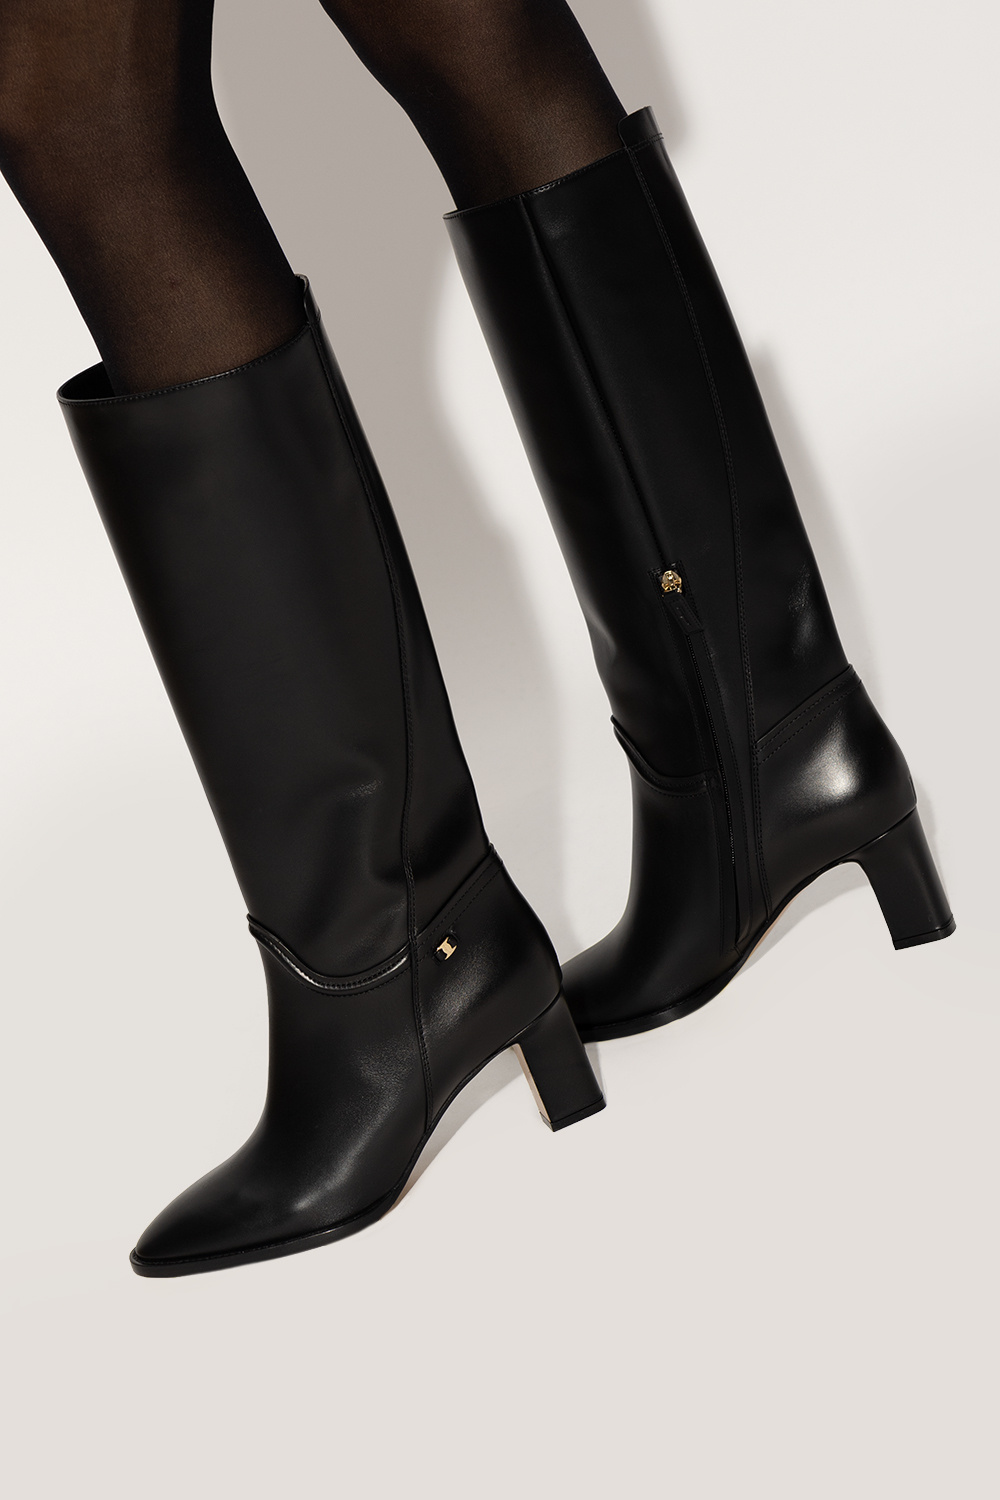 Salvatore Ferragamo ‘Toren’ heeled boots